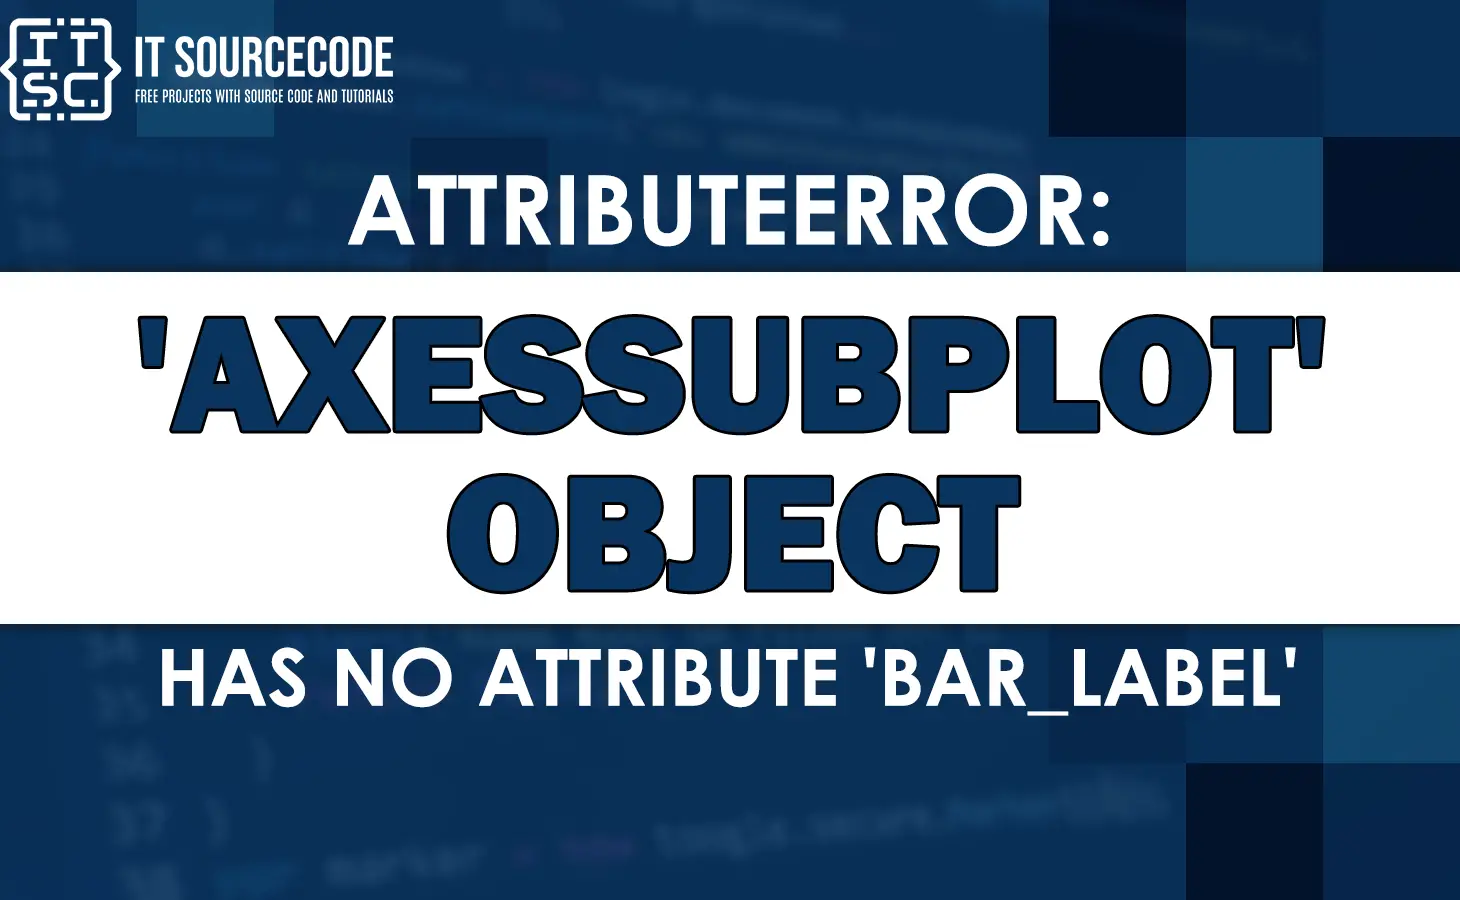 Attributeerror 'axessubplot' object has no attribute 'bar_label'